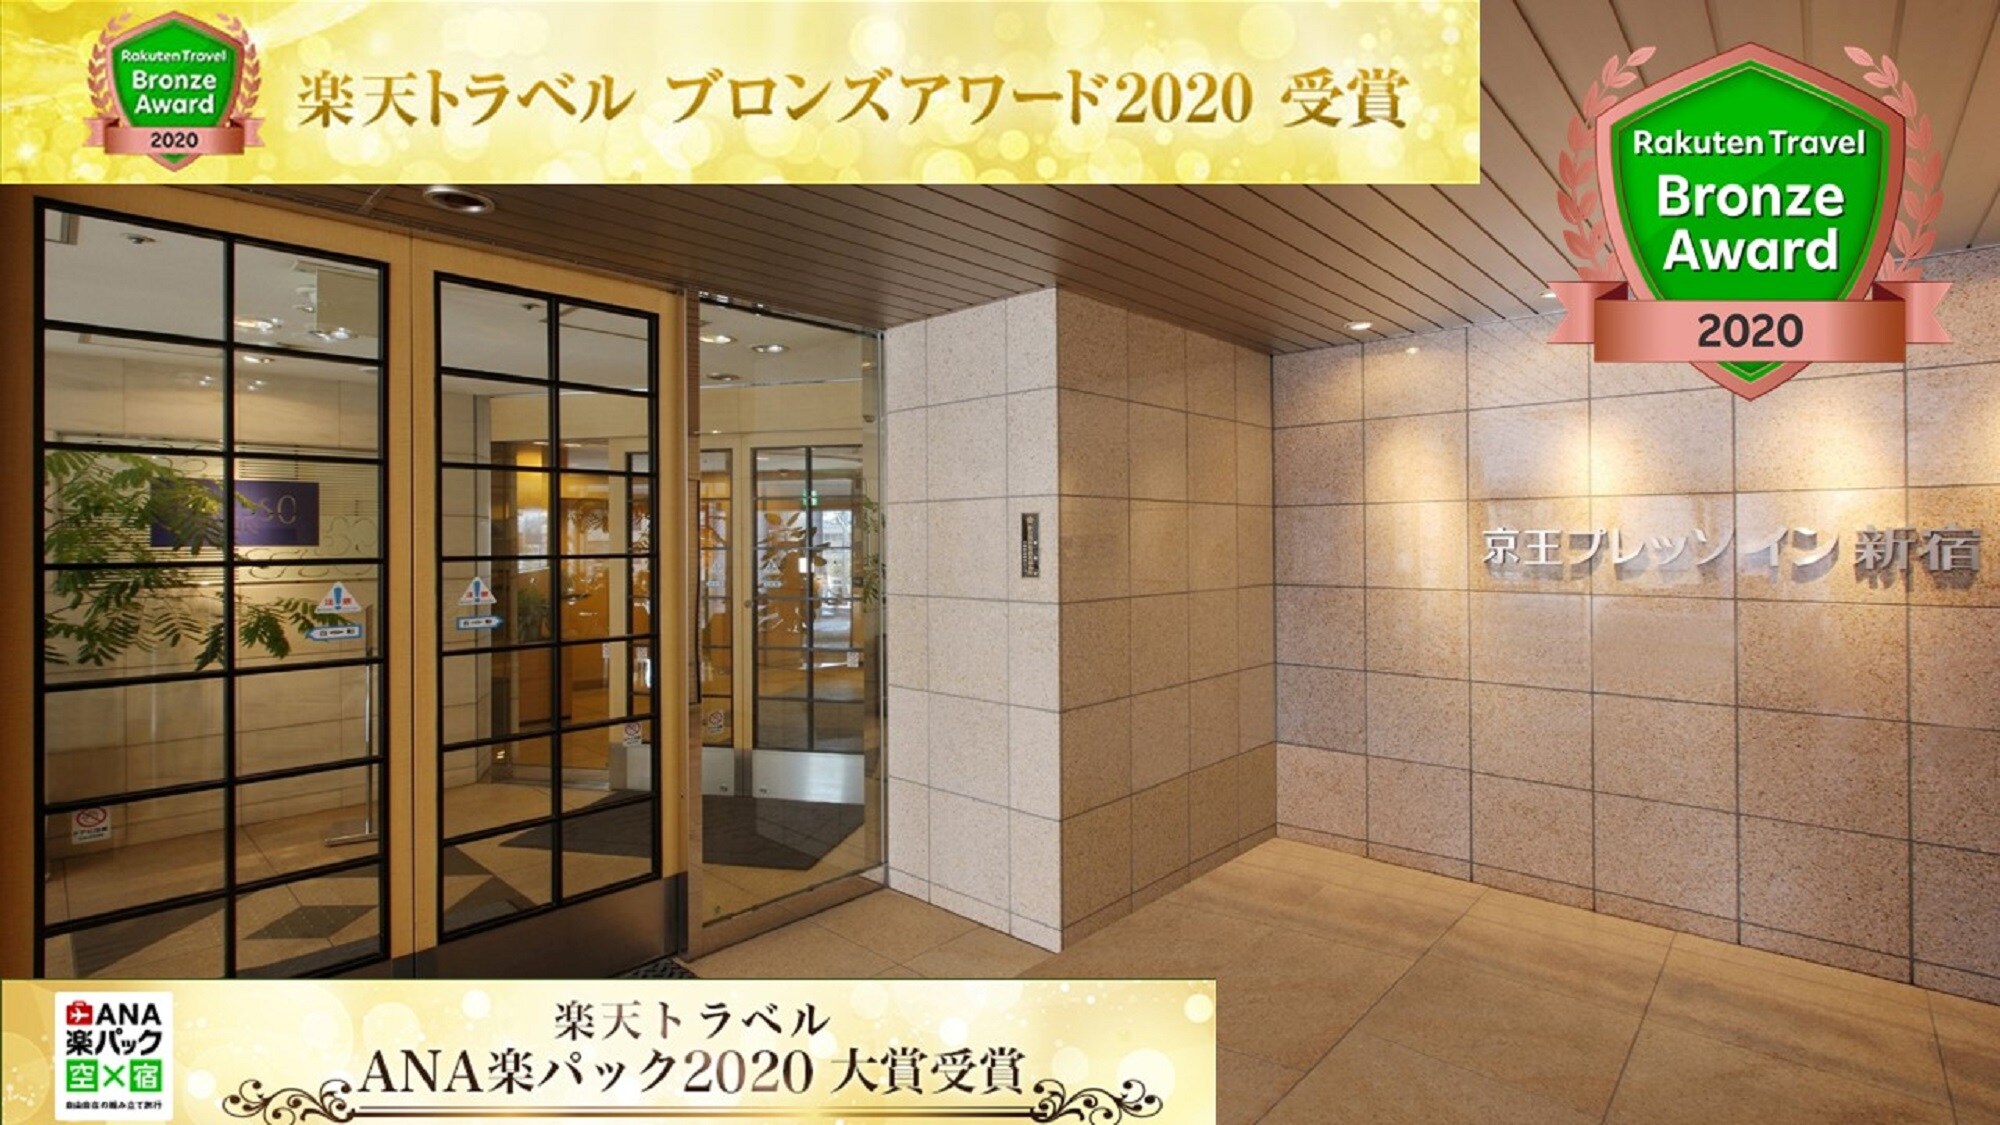 2nd floor entrance bronze award 2020